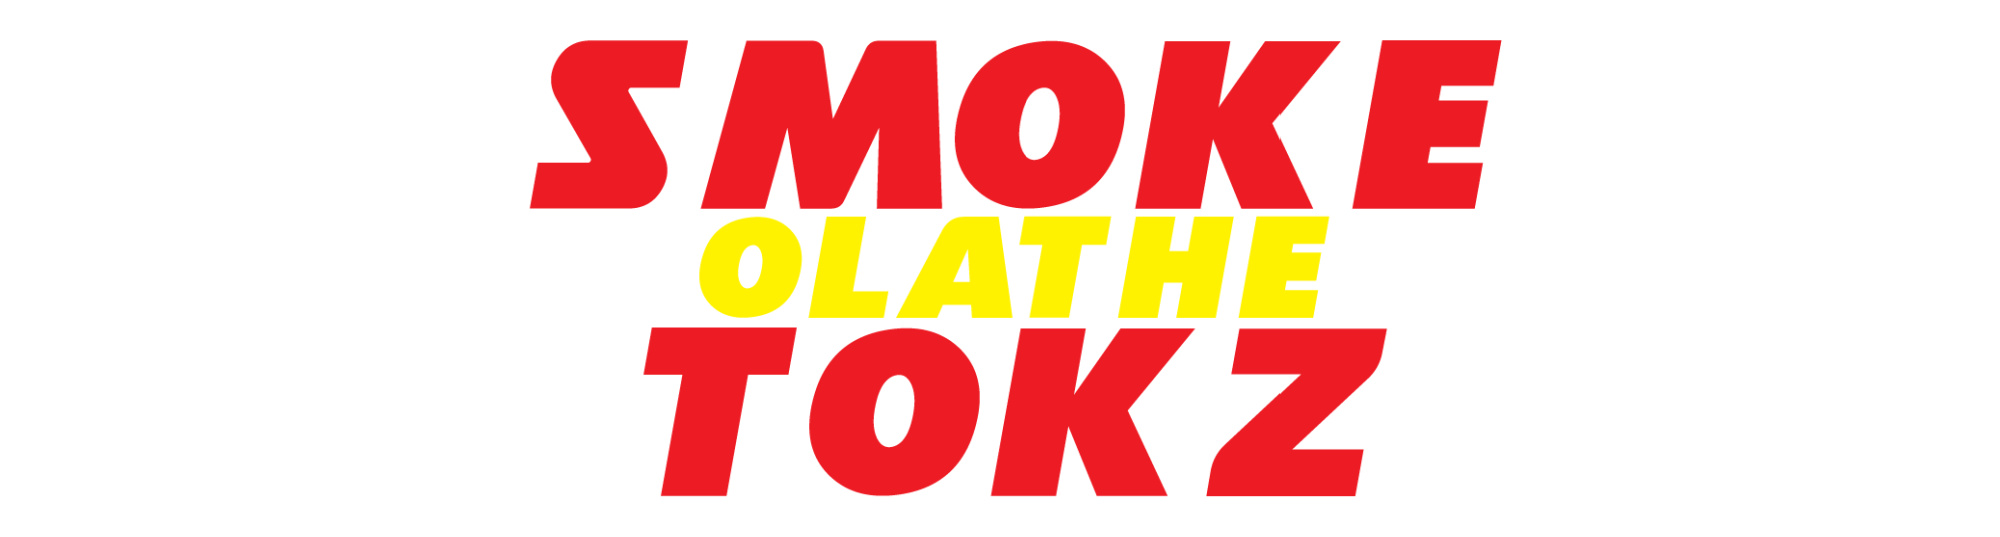 image of smoke tokz olathe in ks